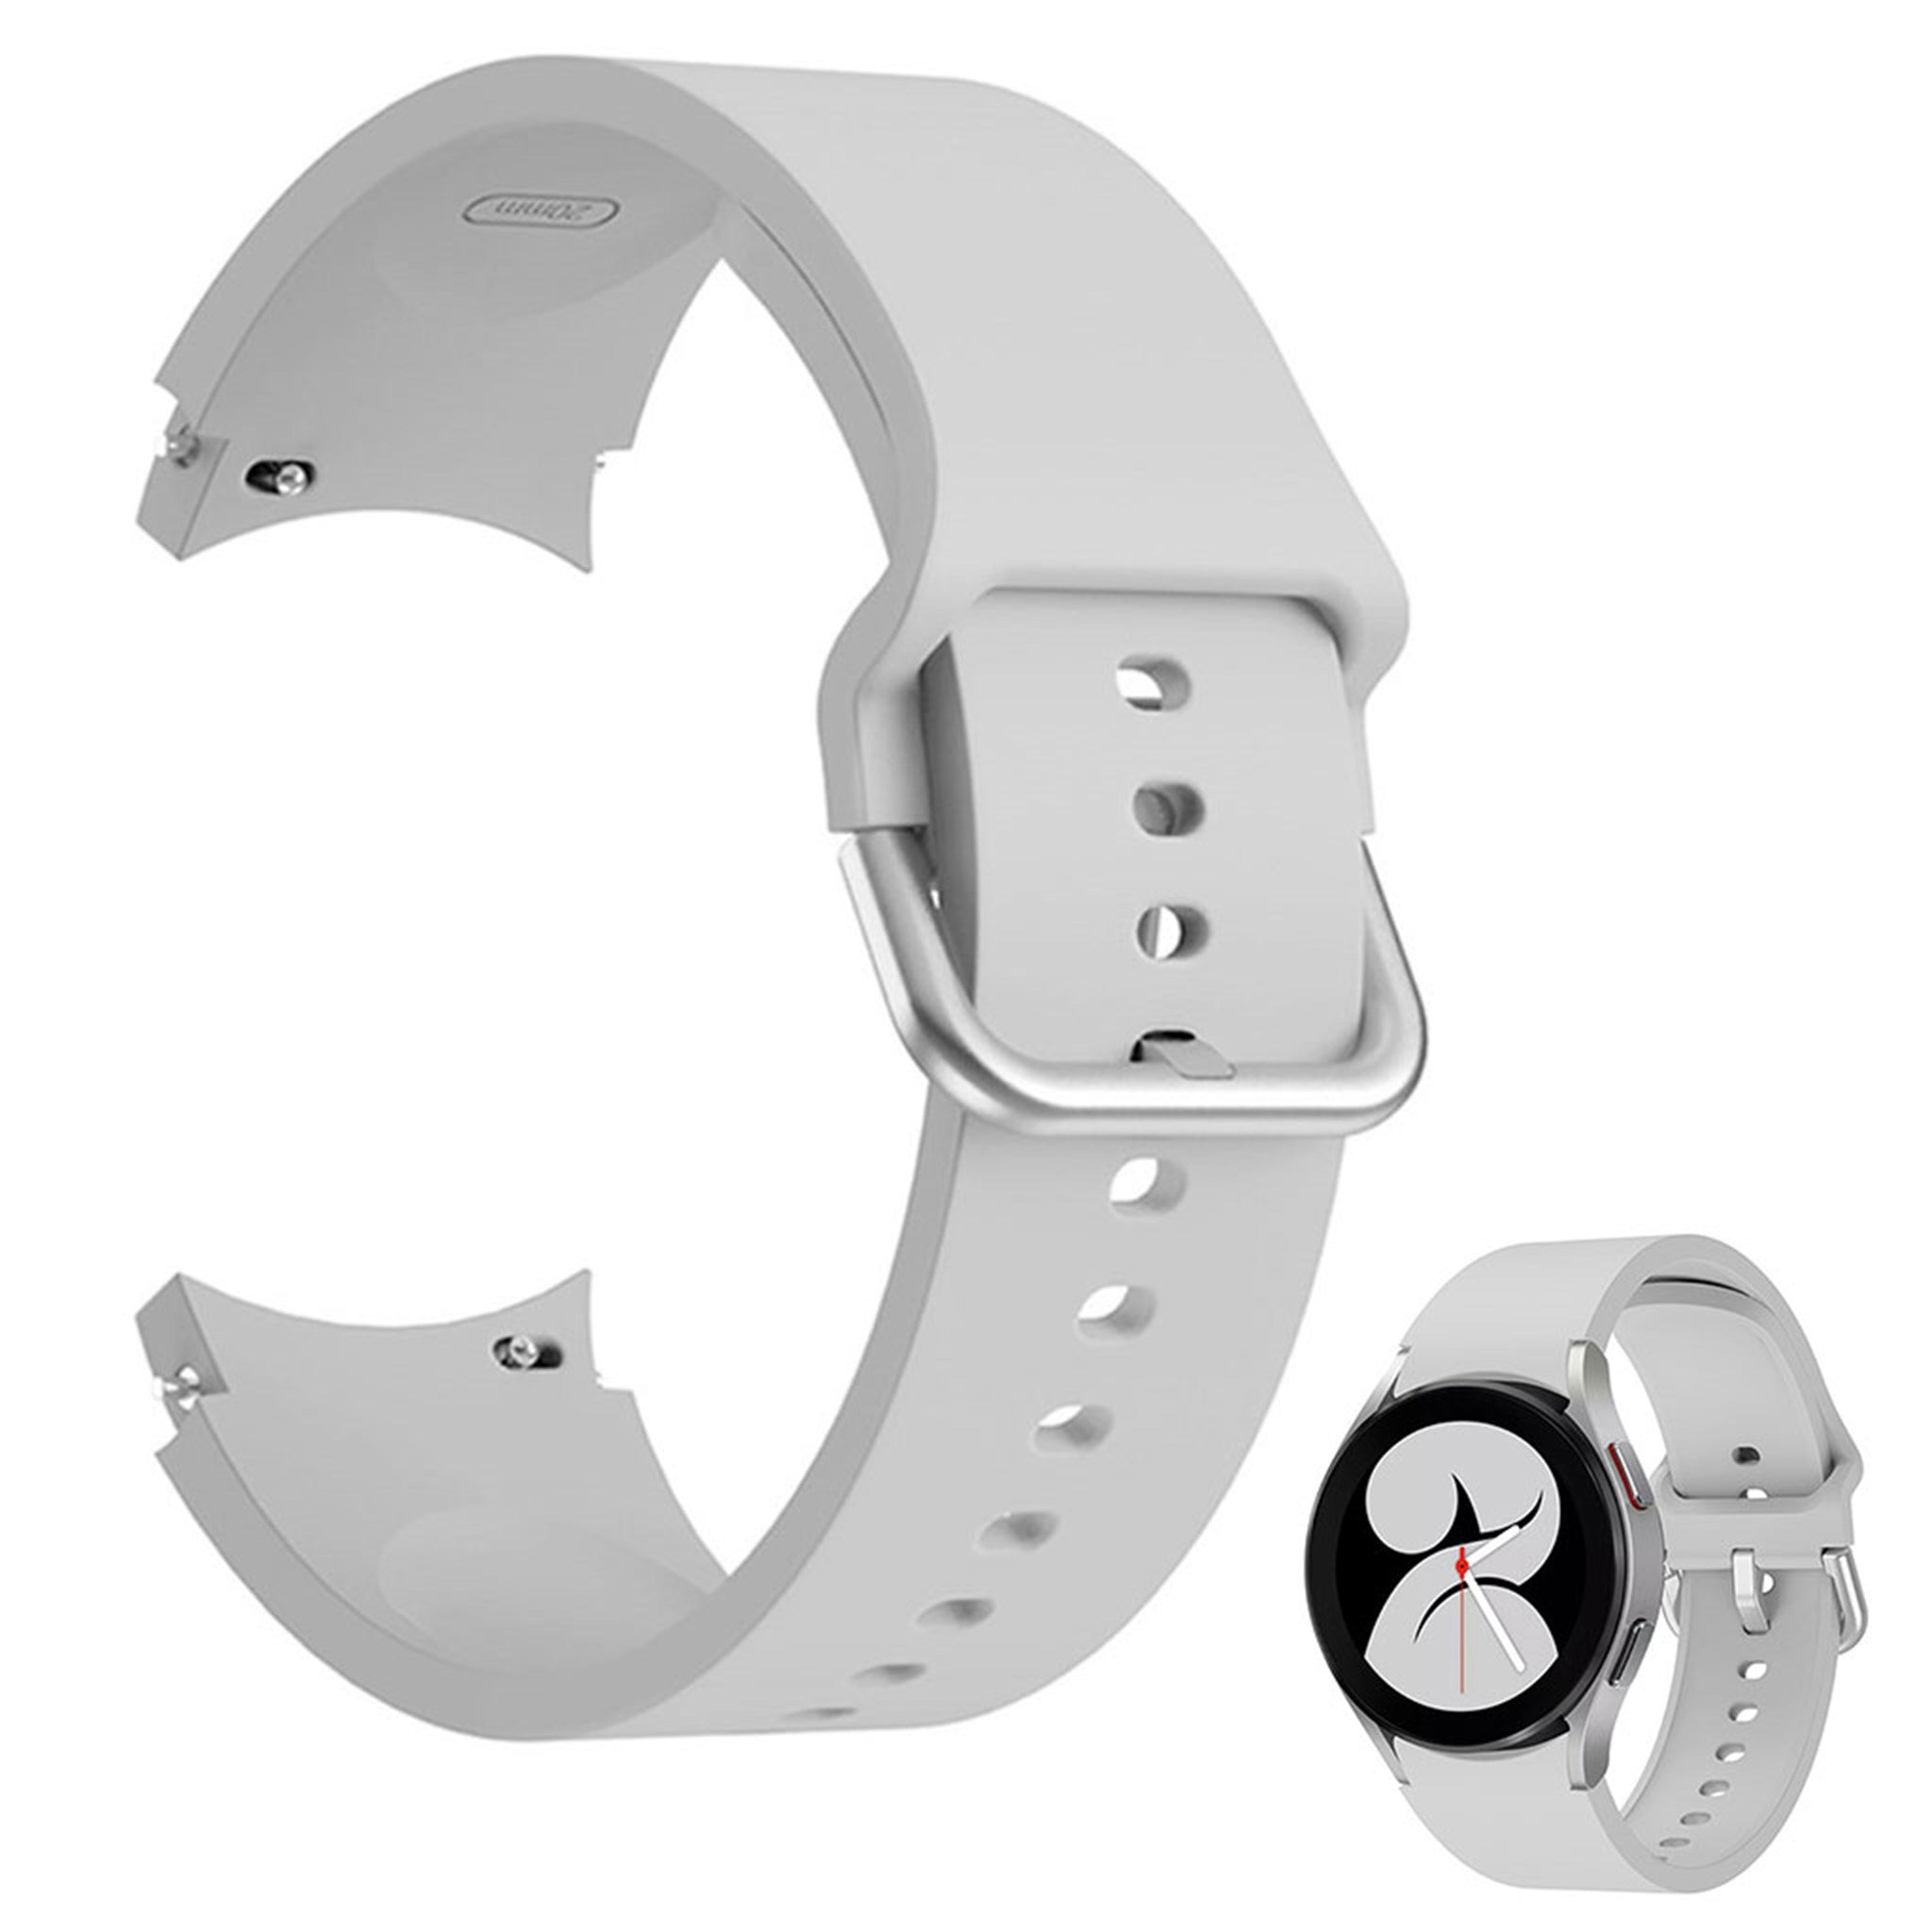 Silicone soft watch strap for Samsung Galaxy Watch 4 device - Grey